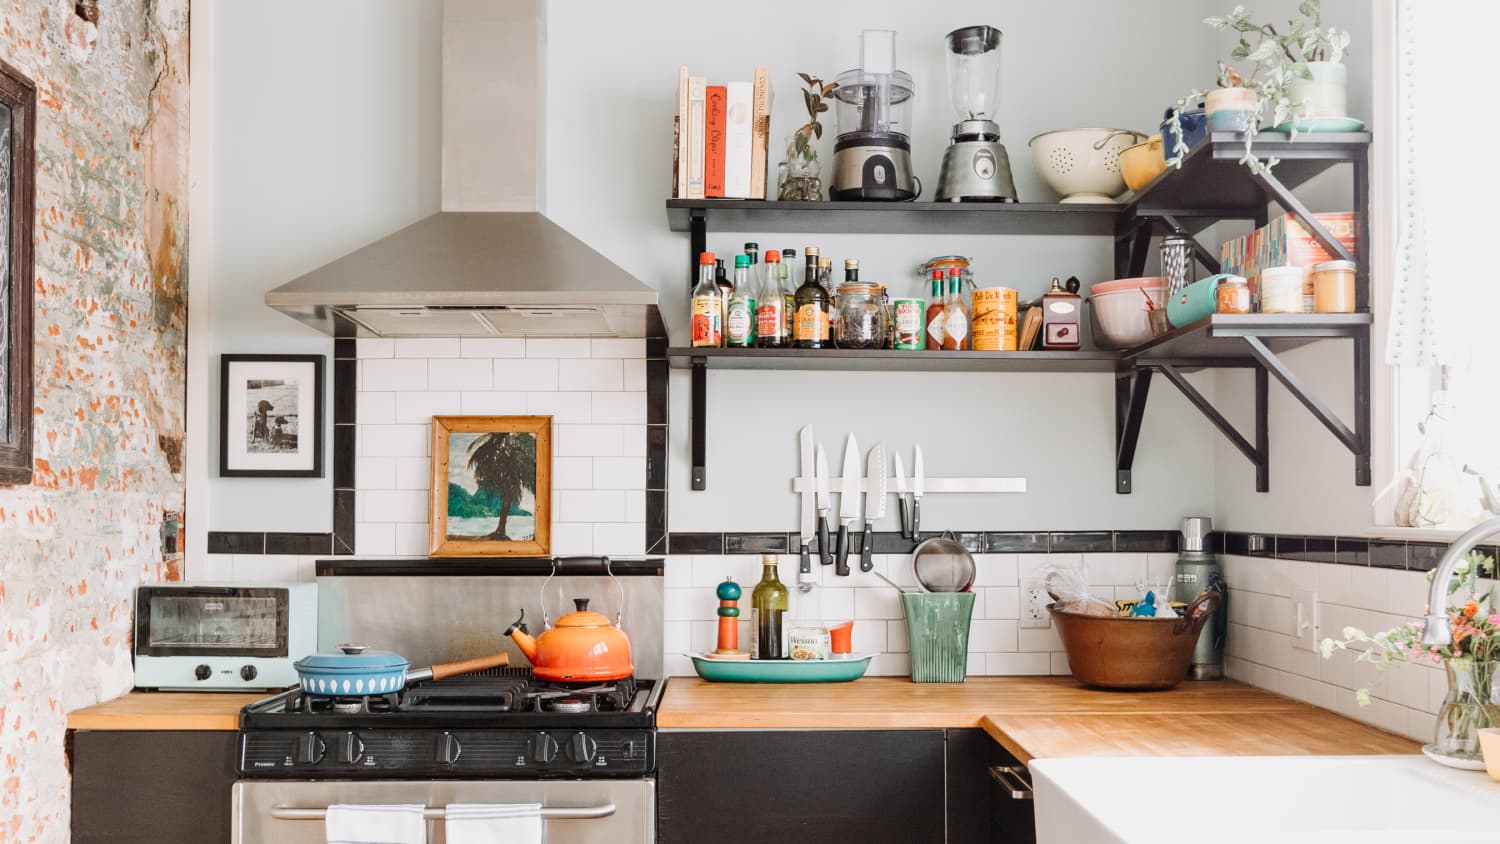 9 Ways to Use Wall Storage to Organize Your Kitchen